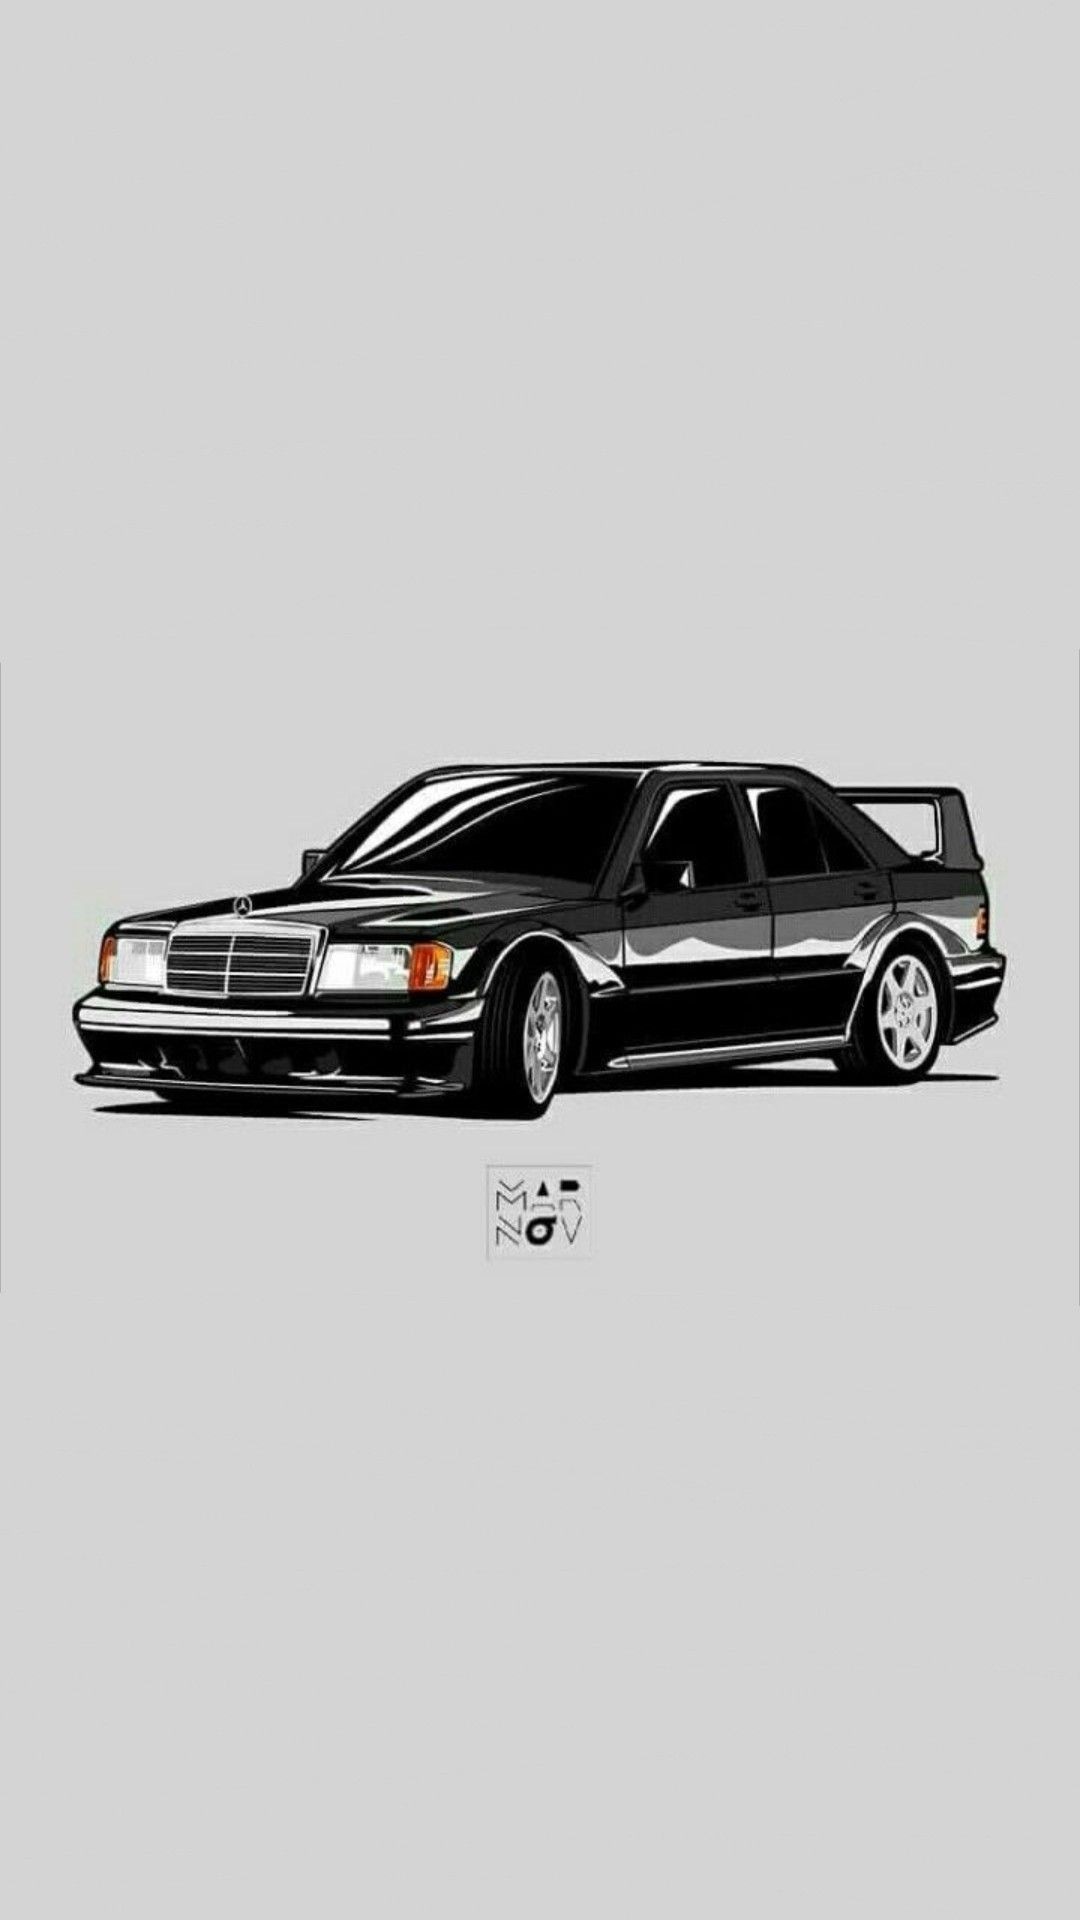 1080x1920 Classic-Mafia-Car-iPhone-Wallpaper